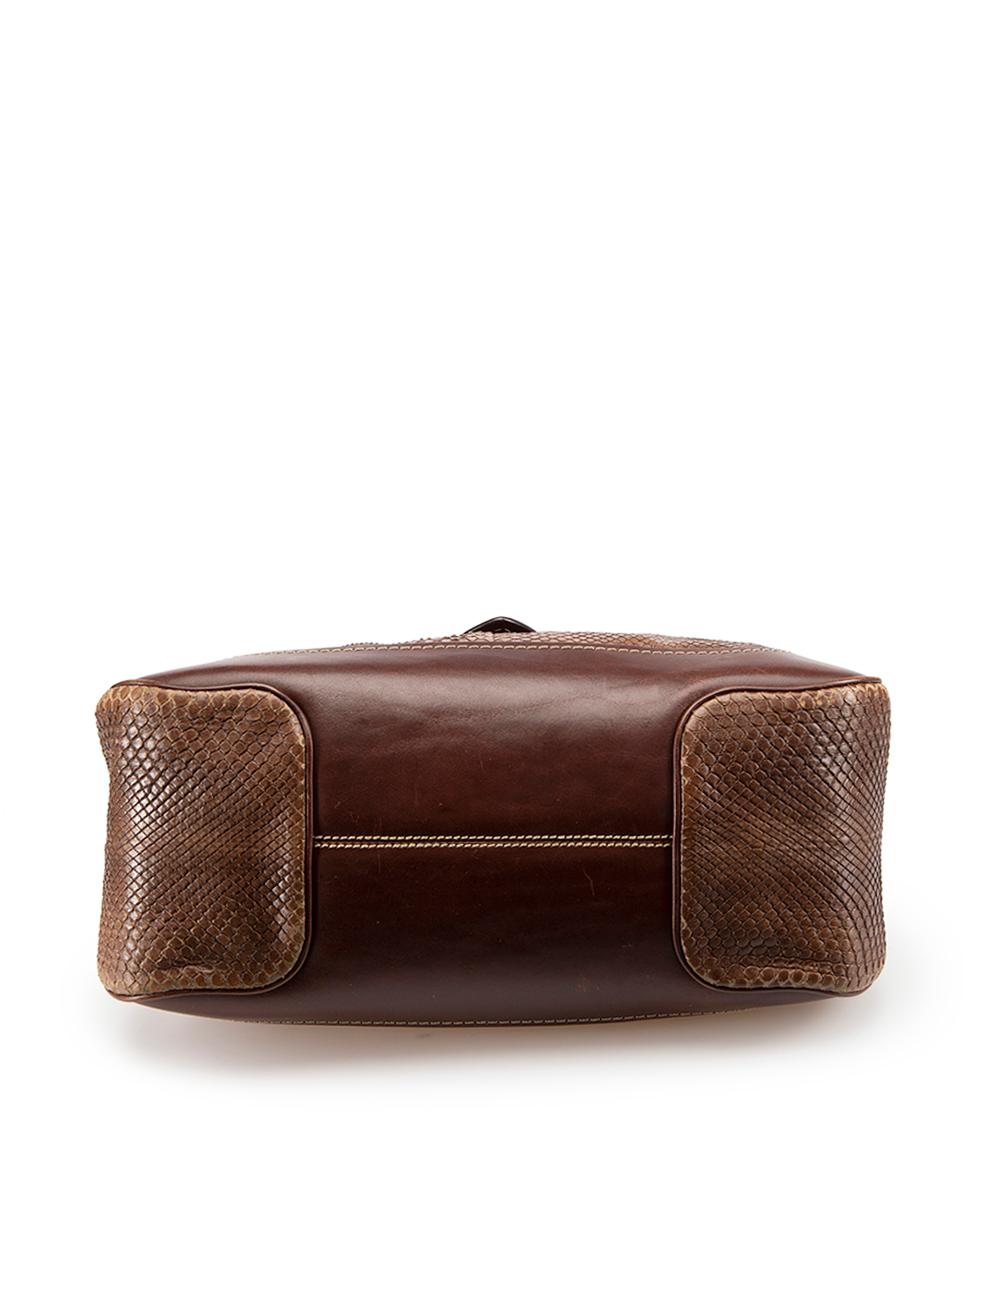 Salvatore Ferragamo Women's Brown Snakeskin Gancini Bag For Sale 1